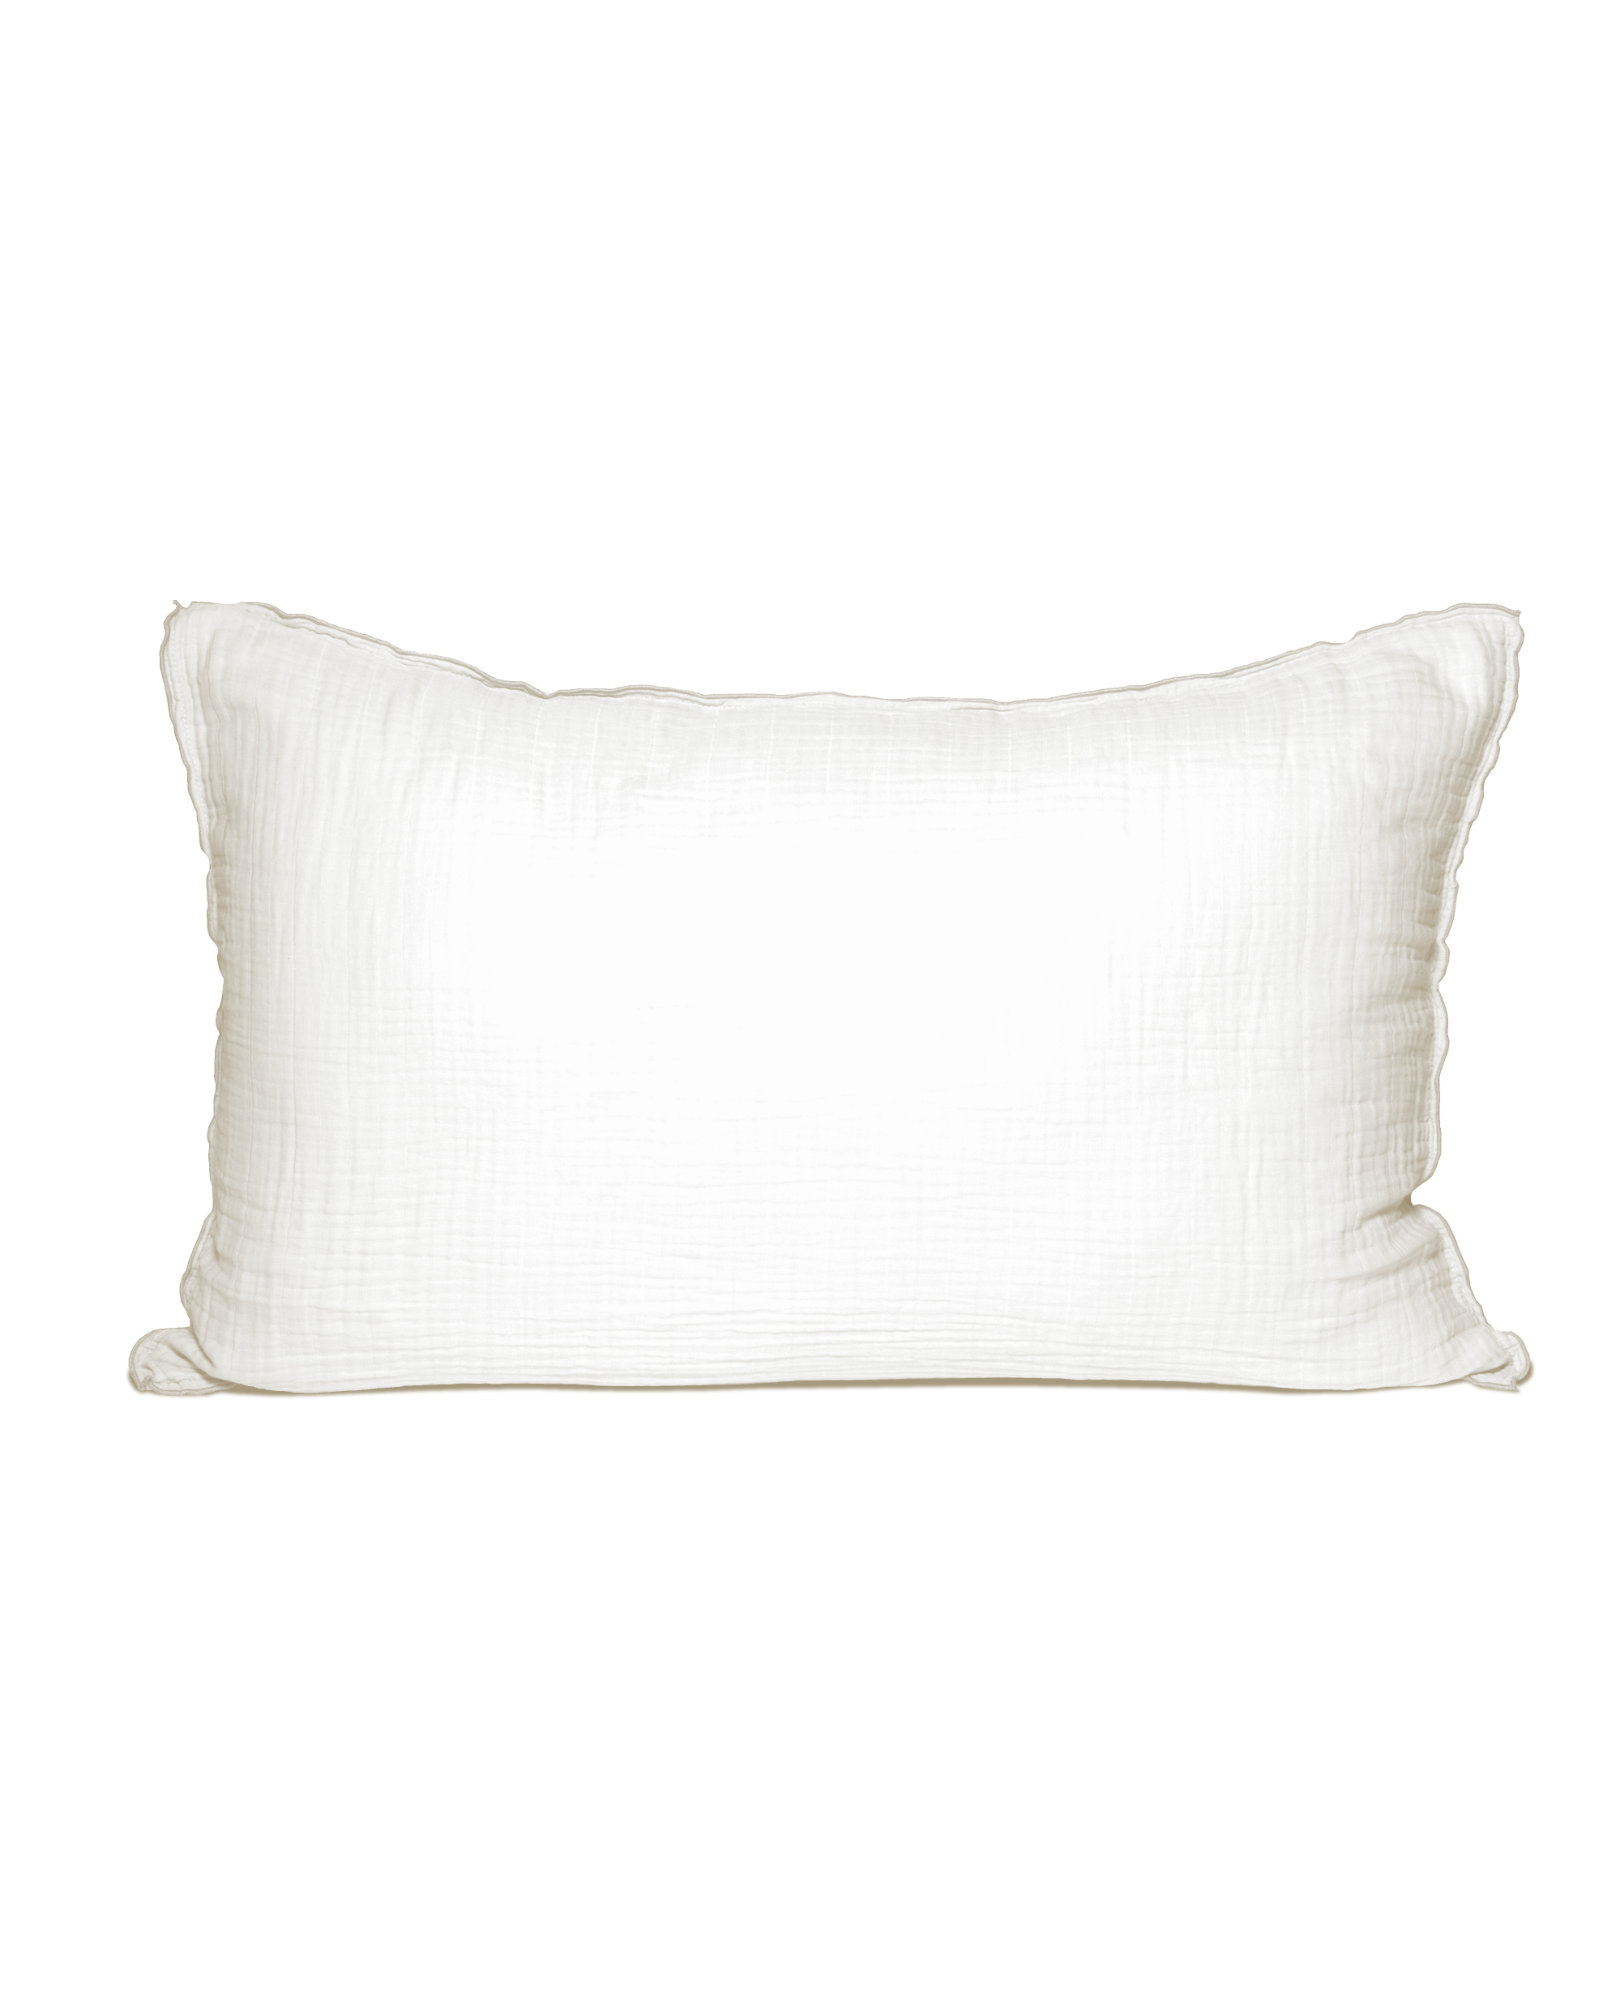 MARIE-MARIE - Pillowcase COCOON Milkyway - 50x75 cm - Milkyway